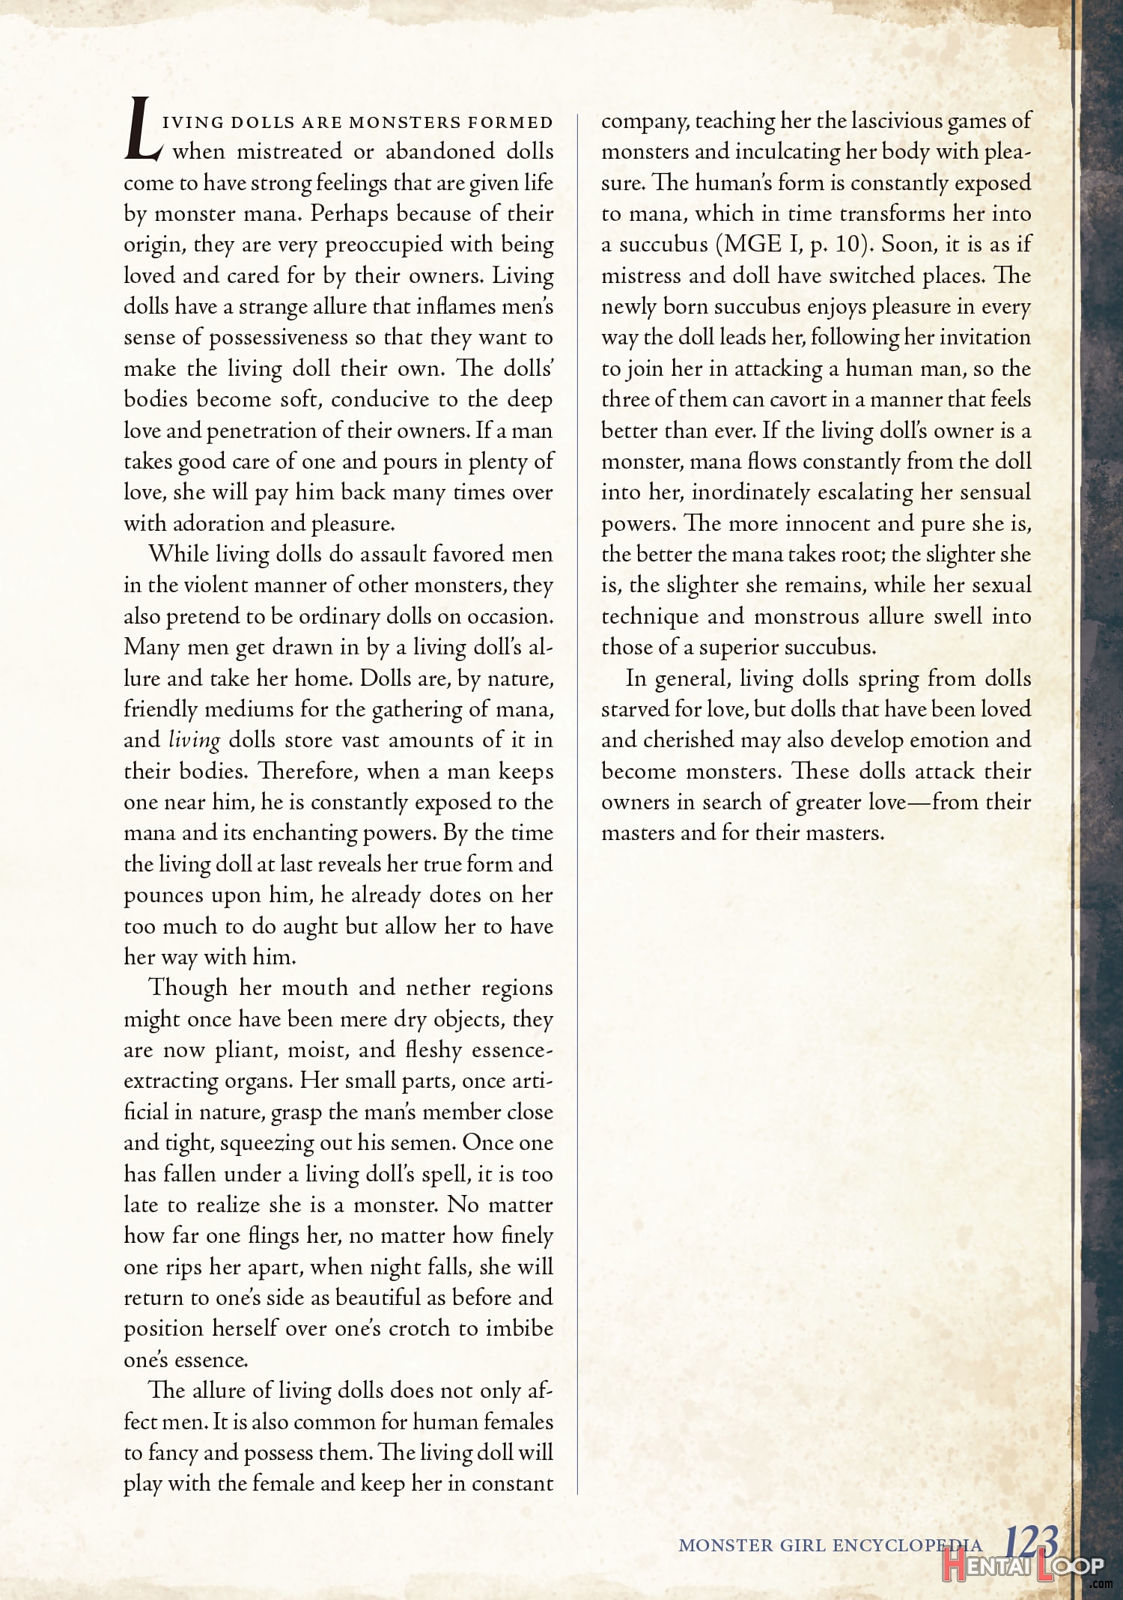 Monster Girl Encyclopedia Vol. 2 page 124